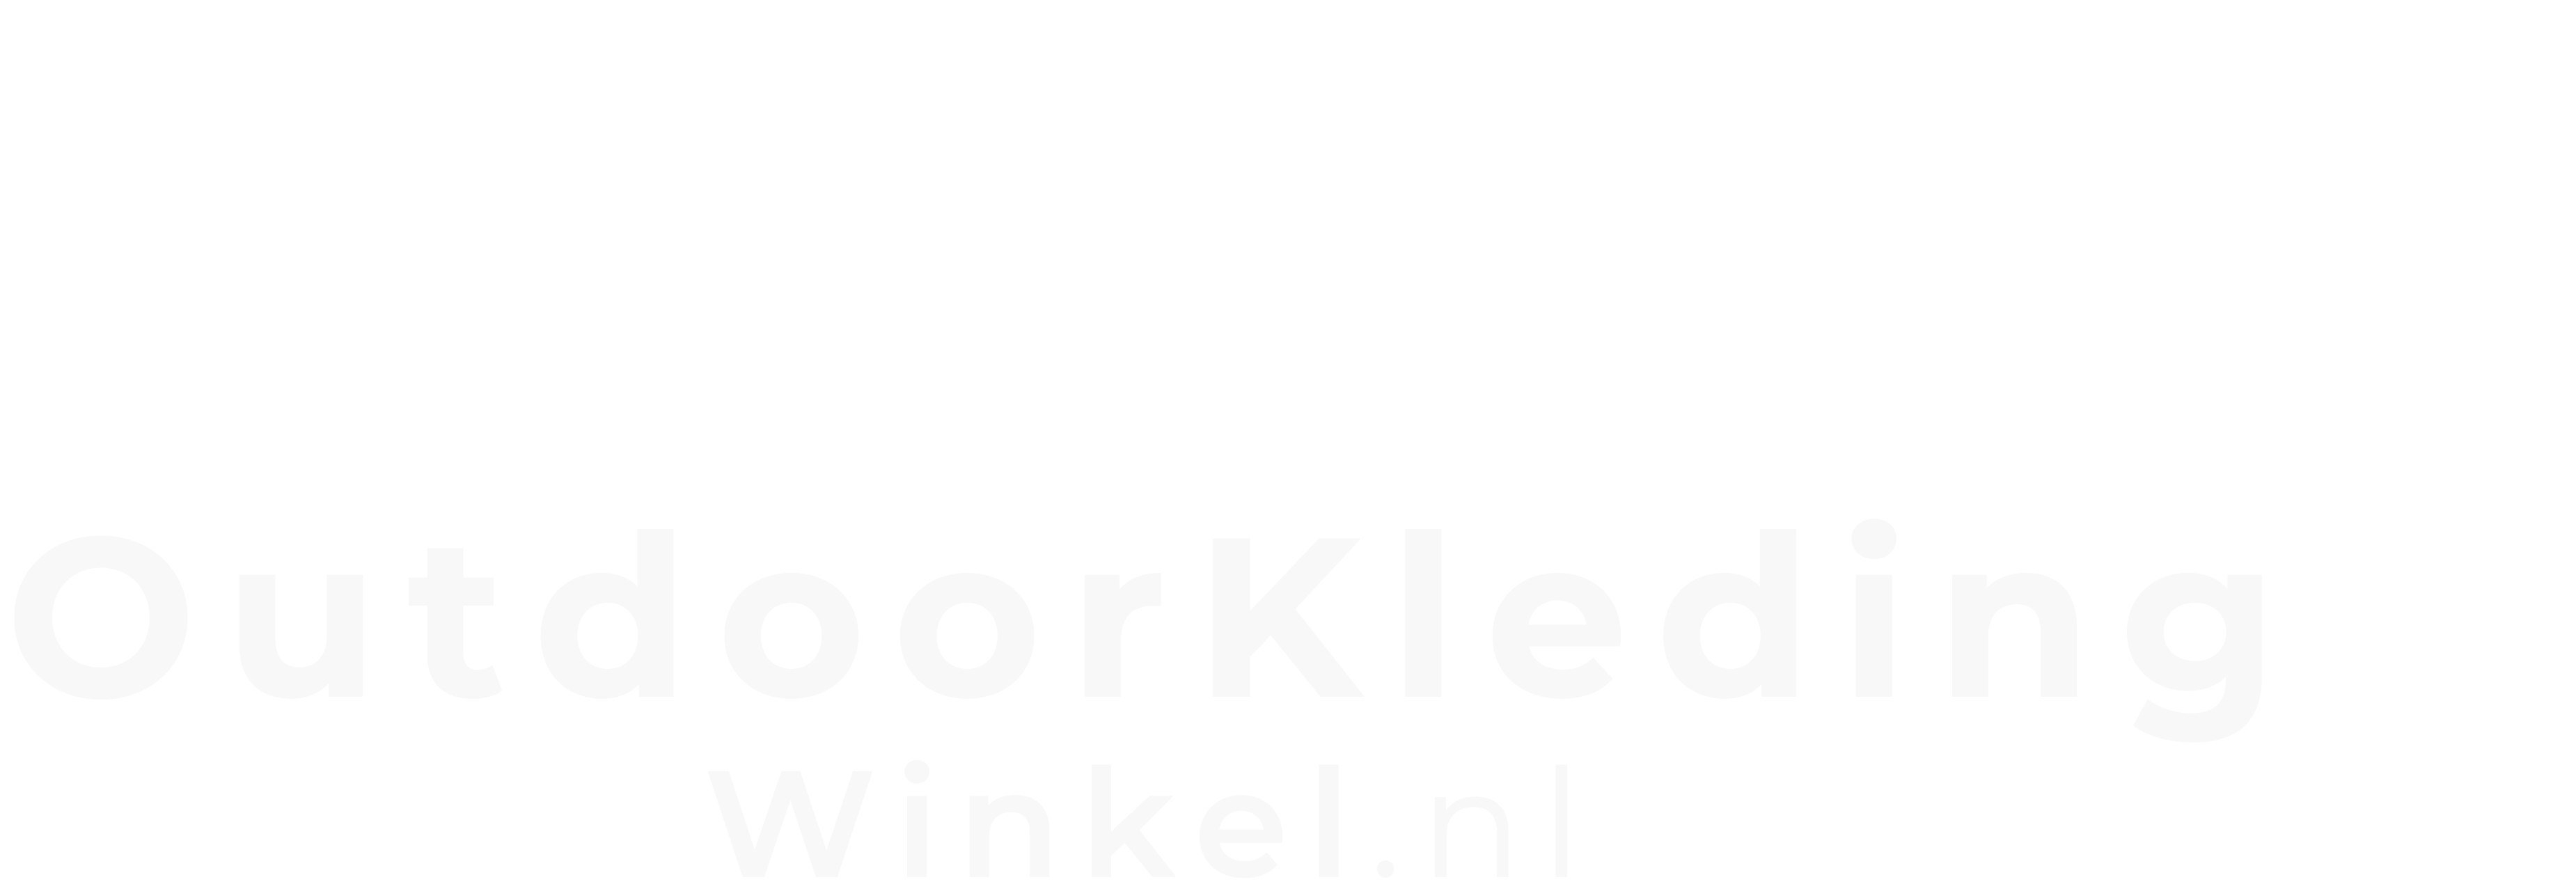 OutdoorKledingWinkel.nl  Logo